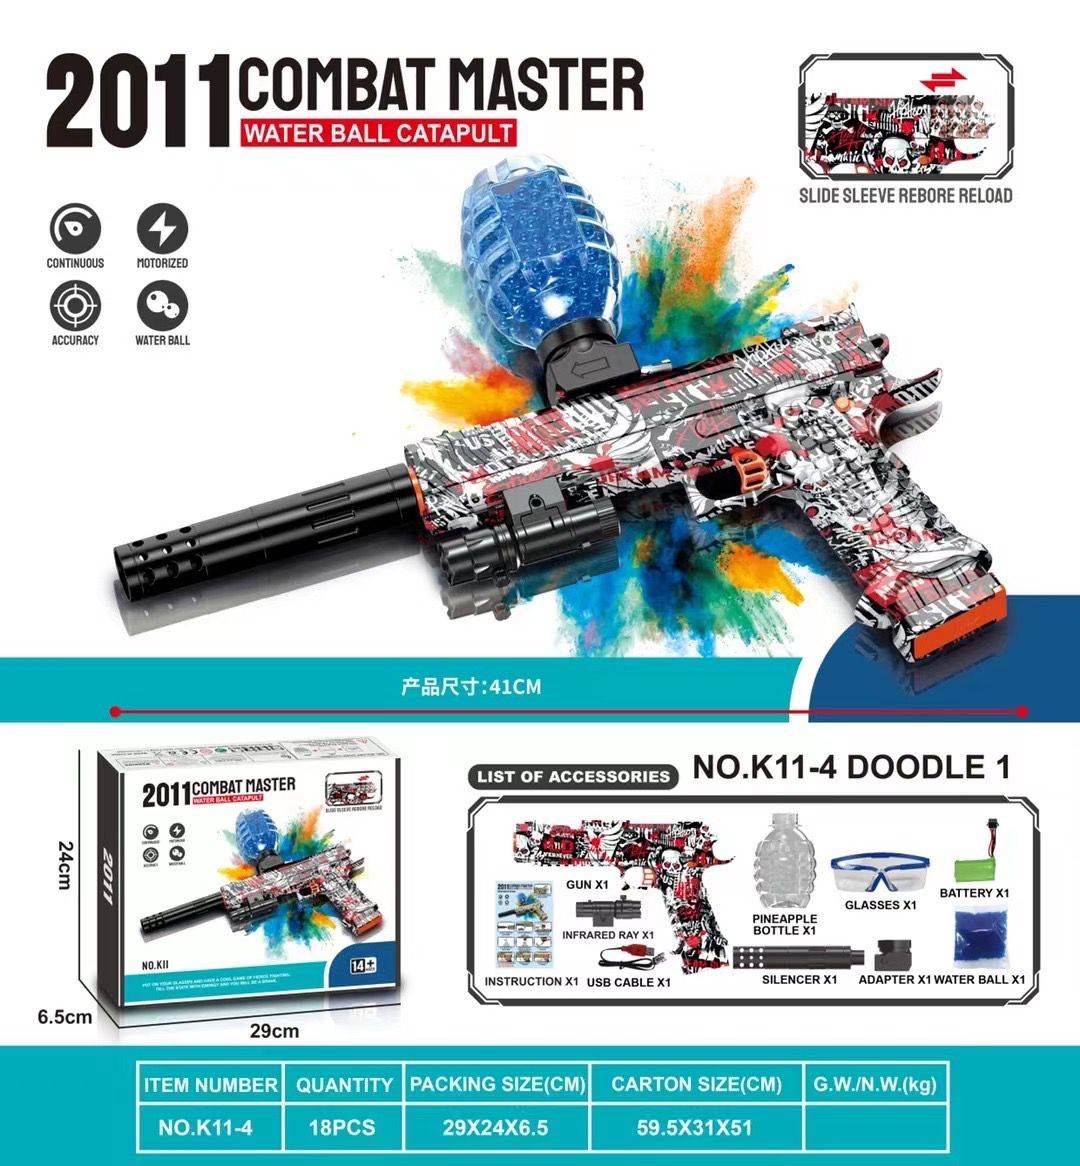 New 2011 Combat Master Gel blaster - BOOST TOYS